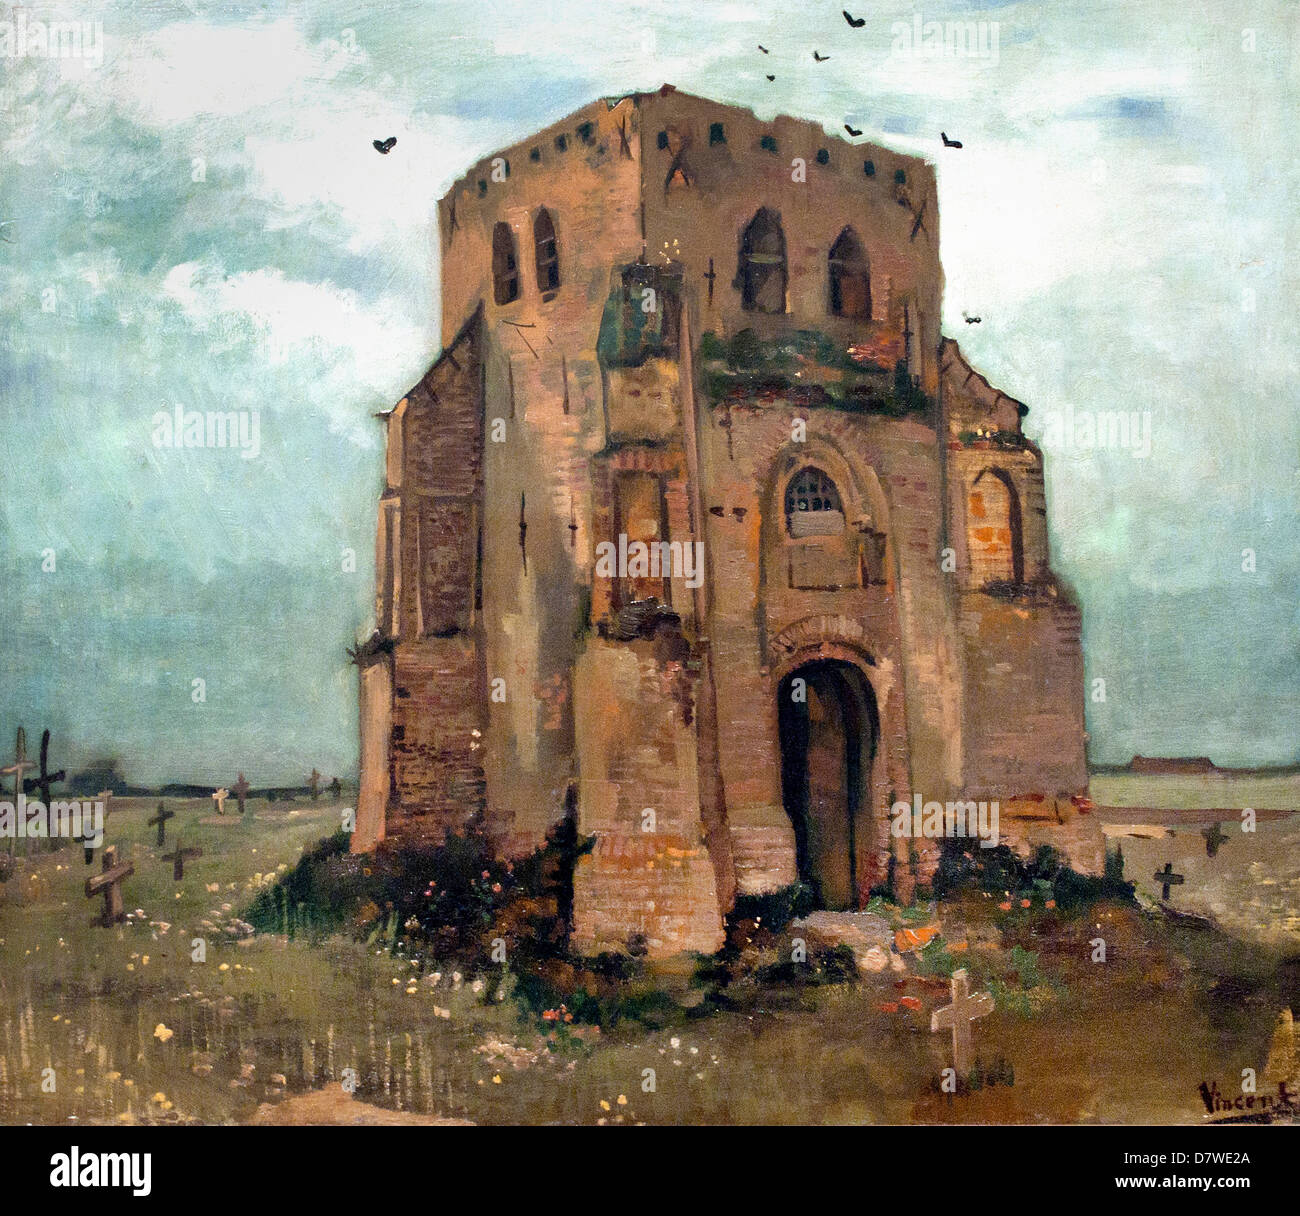 La torre de la Iglesia antigua en Nuenen 1885 Vincent van Gogh 1853 - 1890 Holanda Holandesa Post Impresionismo Foto de stock